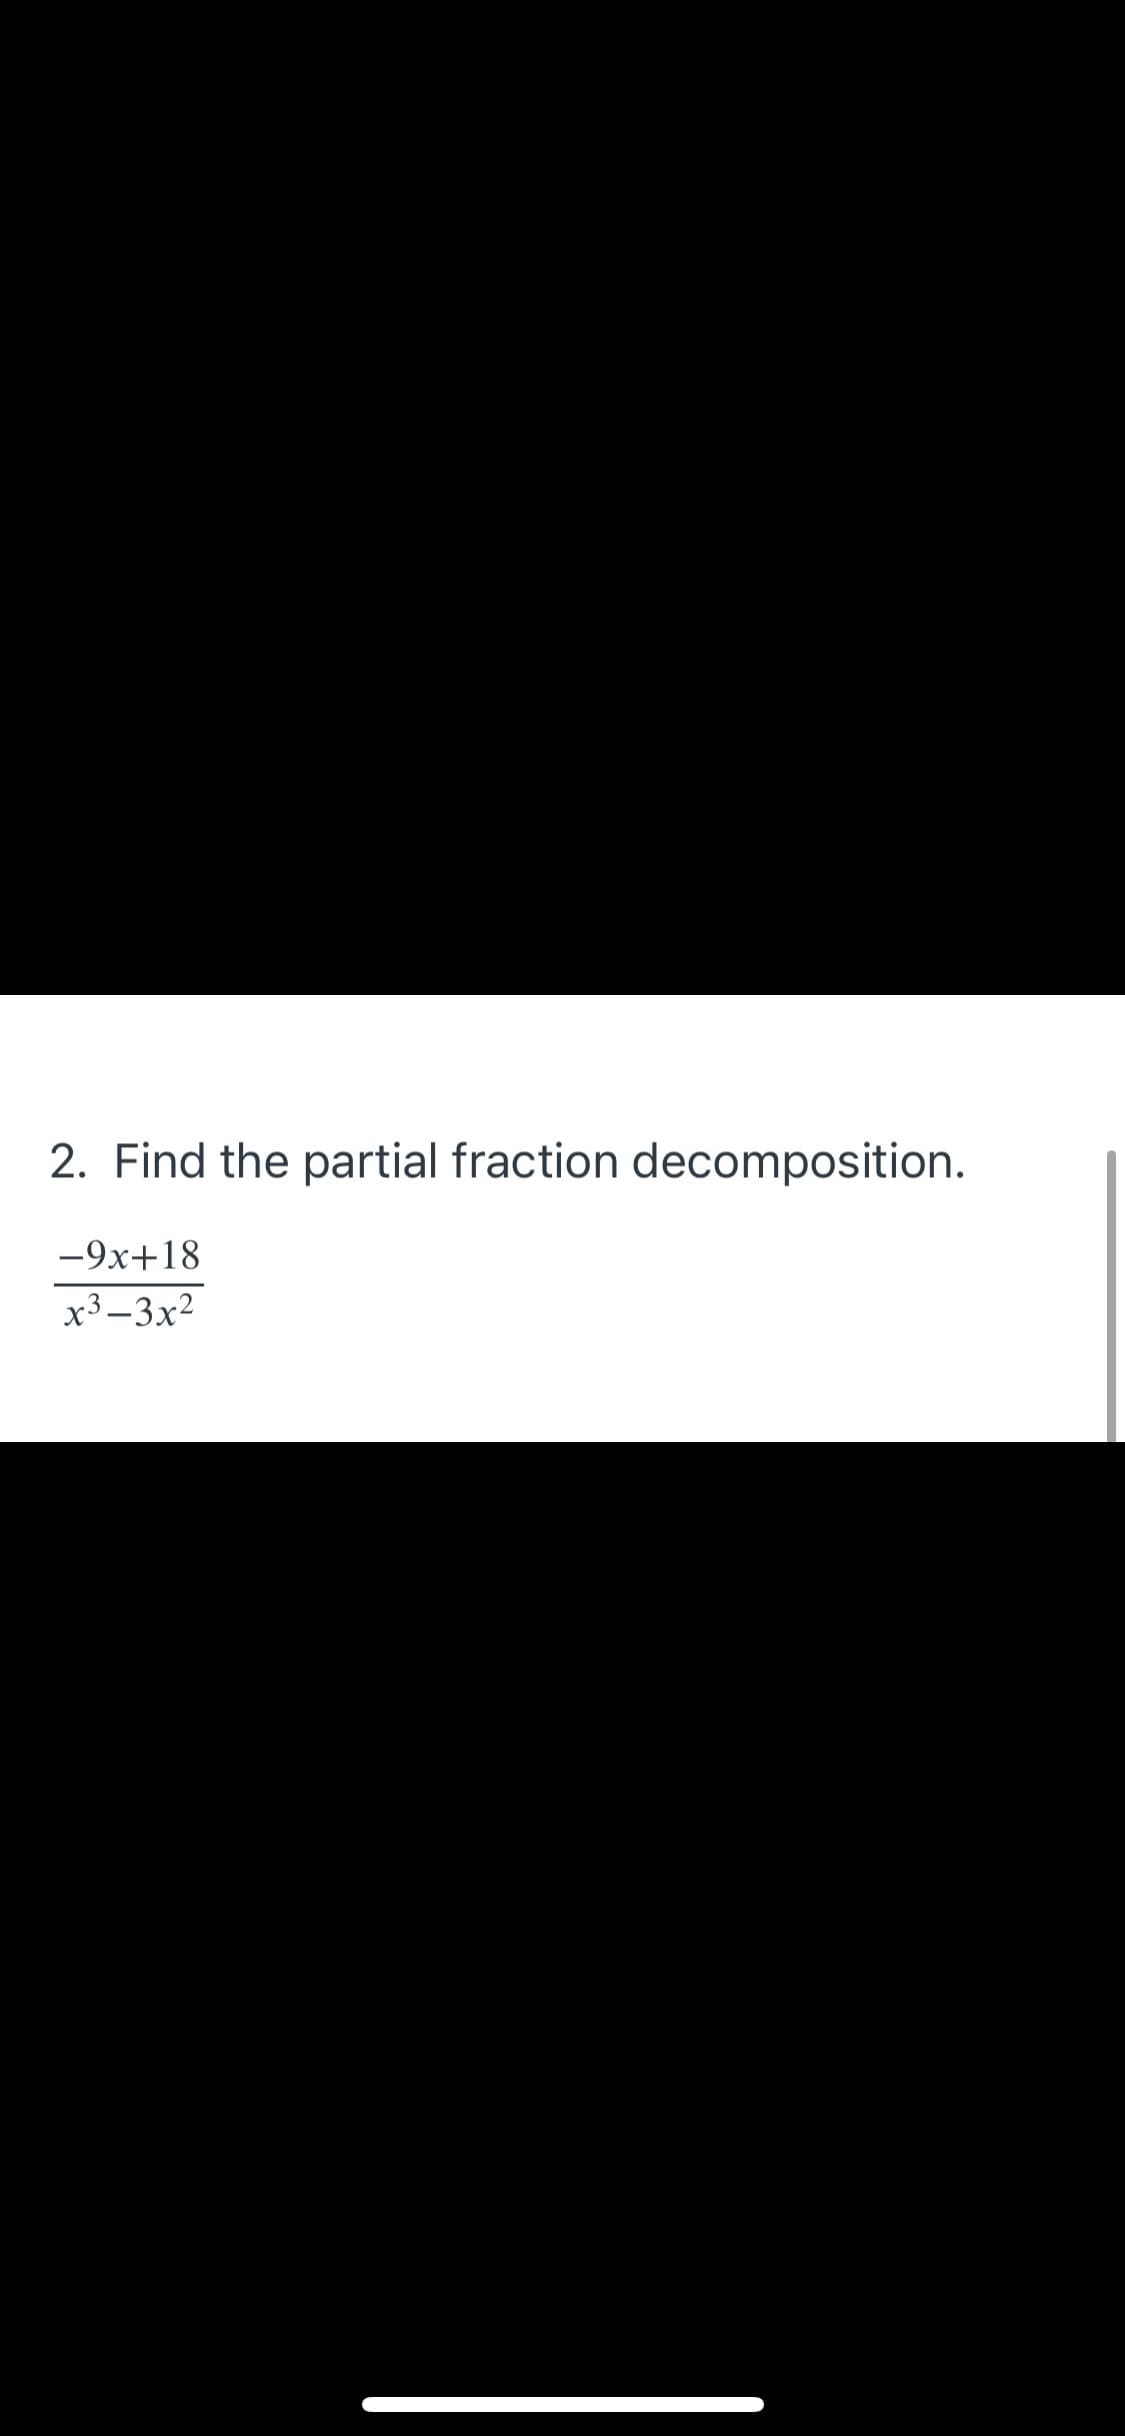 2. Find the partial fraction decomposition.
-9x+18
x3-3x2
